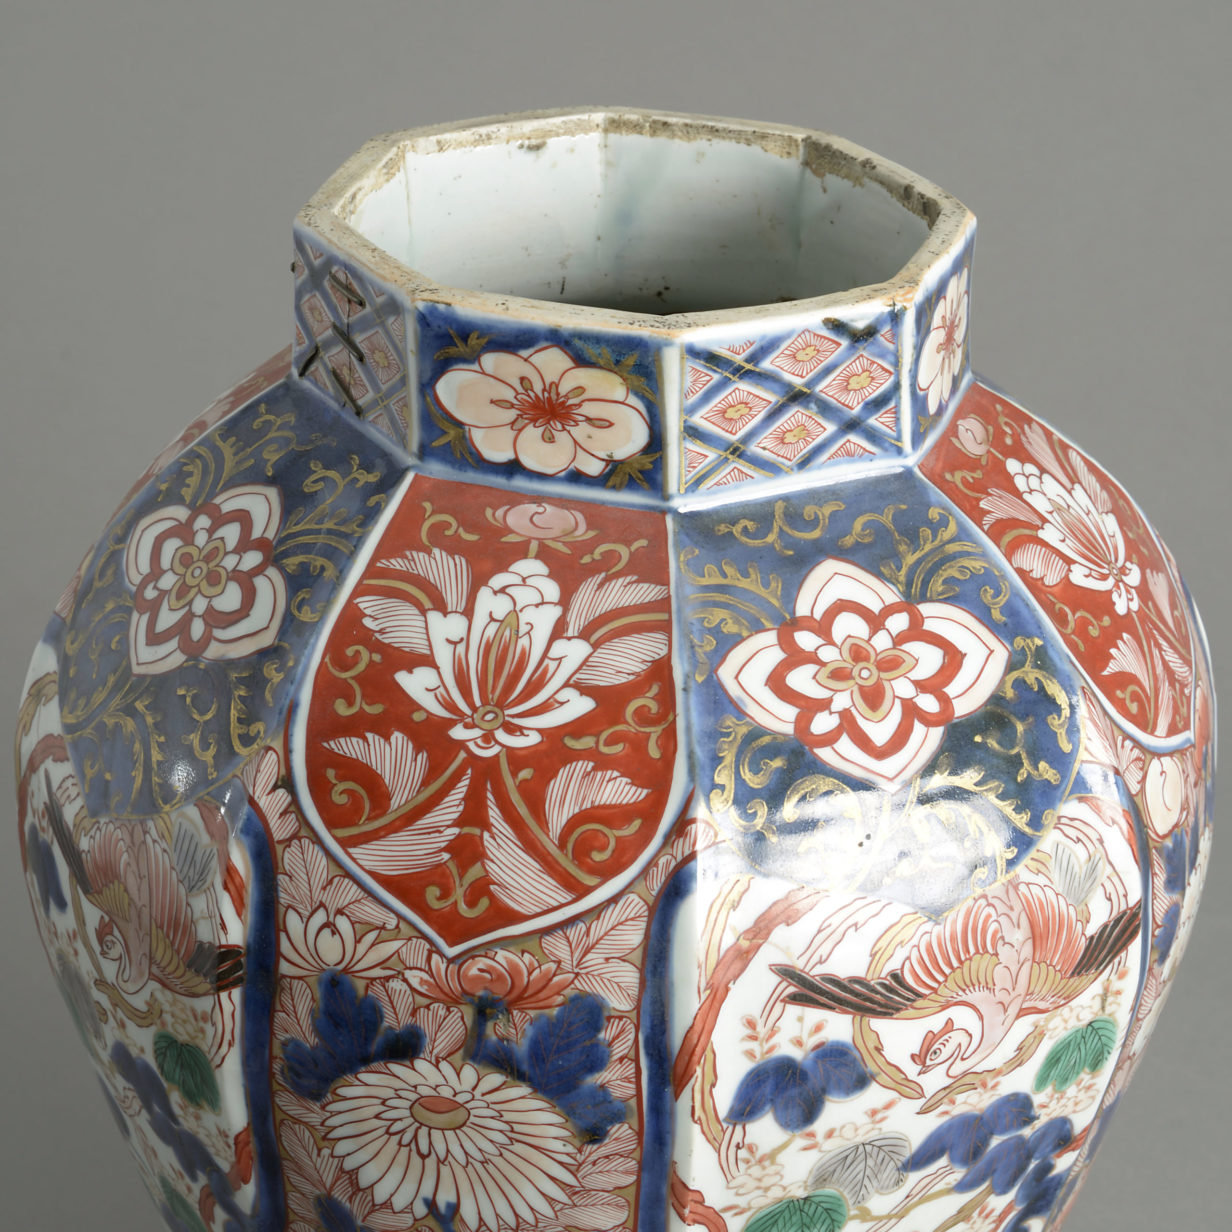 An early 18th century imari porcelain vase